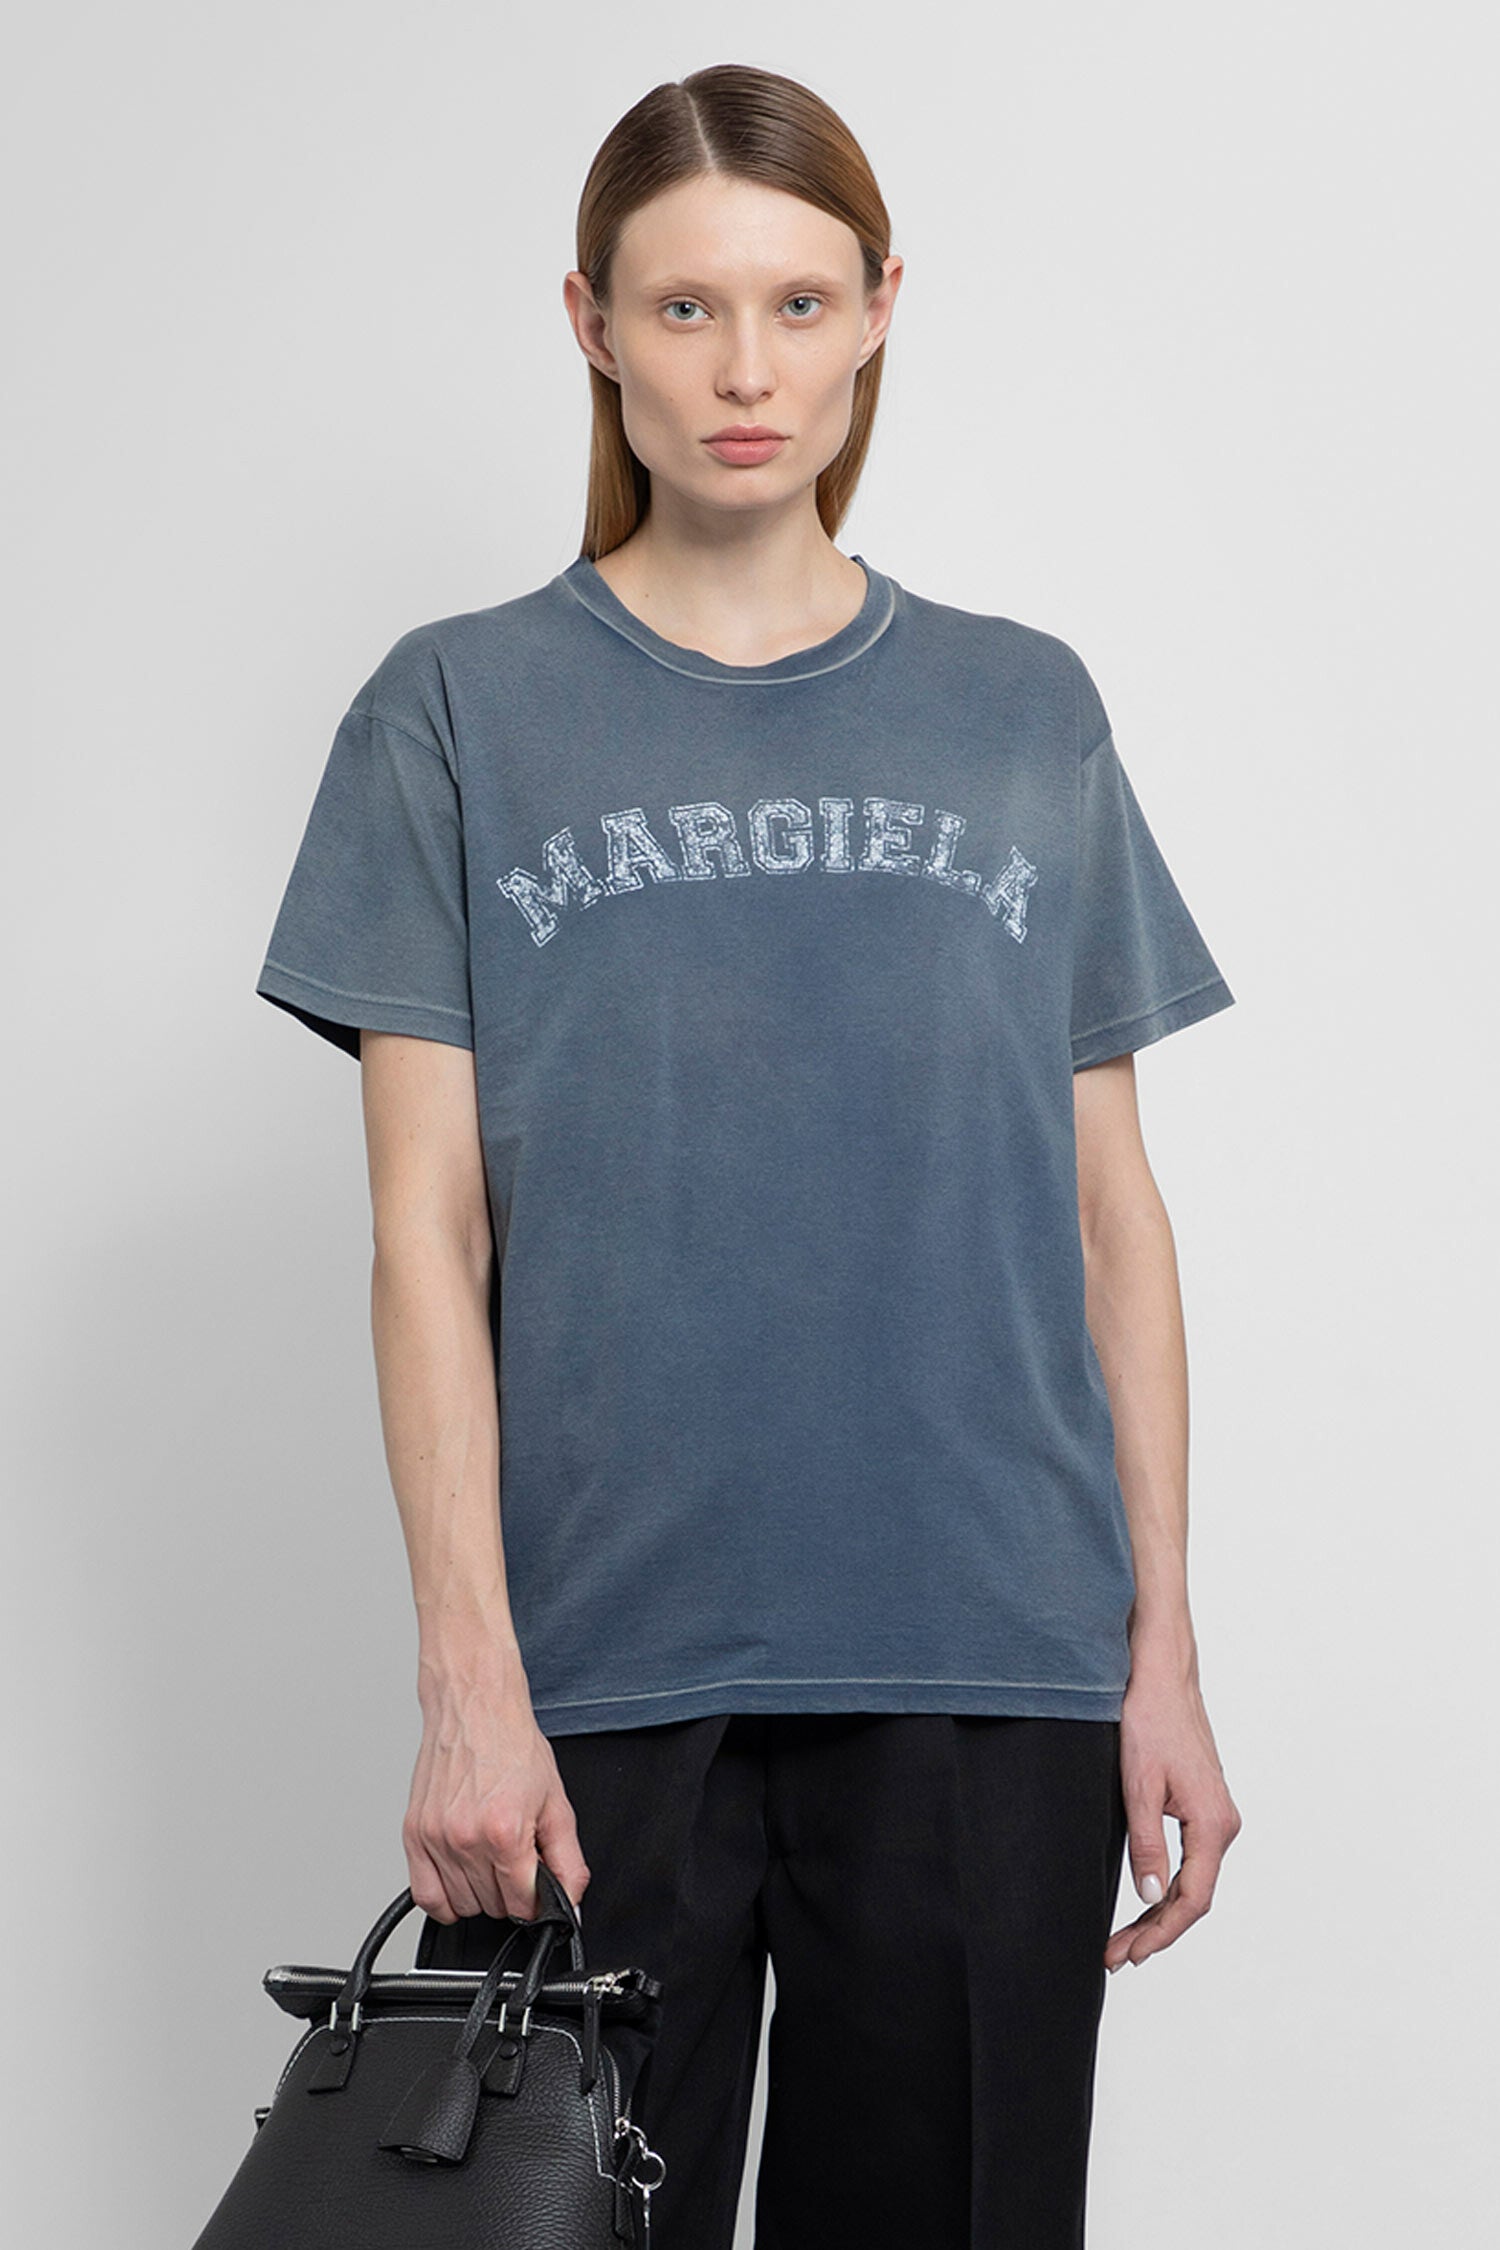 MAISON MARGIELA WOMAN BLUE T-SHIRTS